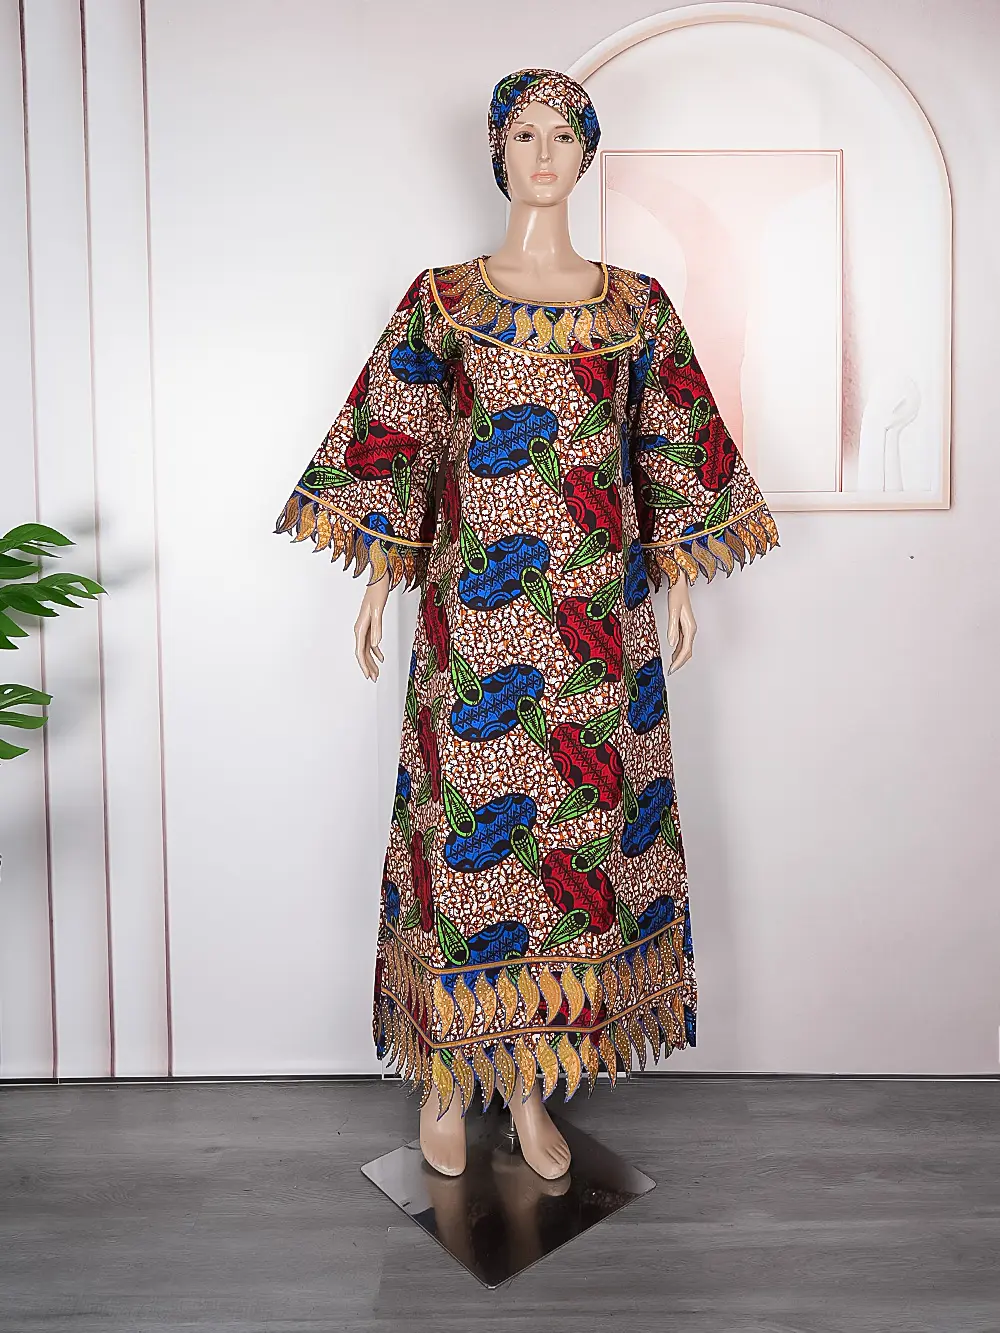 H & D gaun kustom Afrika wax pakaian tradisional gaun longgar musim panas lengan pendek